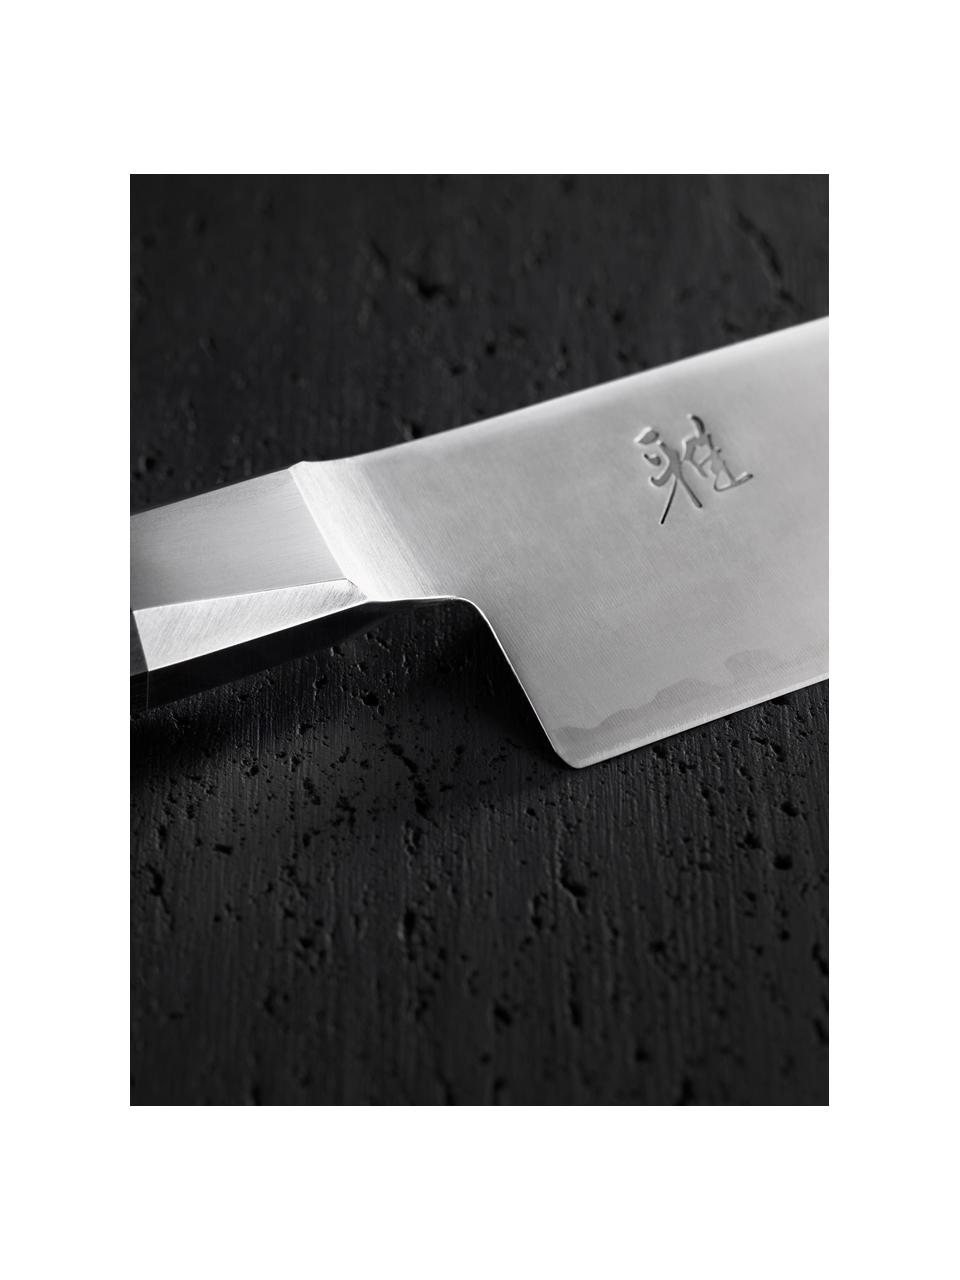 Nóż Santoku Miyabi, Odcienie srebrnego, ciemne drewno naturalne, D 33 cm